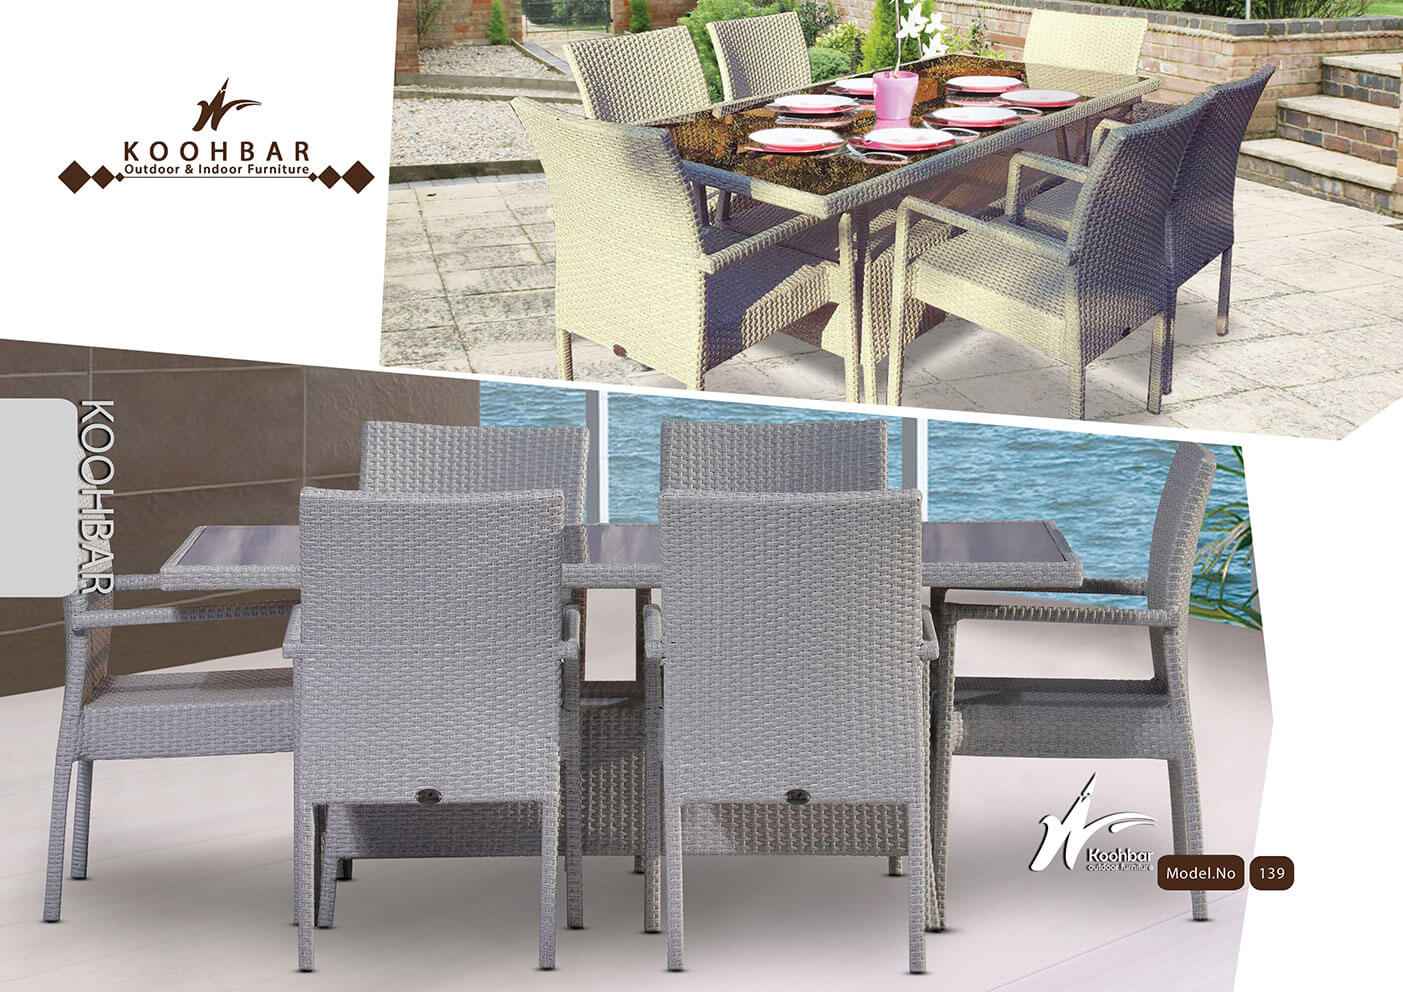 kohbar patio conversation sets 139 model0 - ست میز صندلی ناهارخوری باغی کوهبر مدل ۱۳۹ -  - patio-dining-furniture